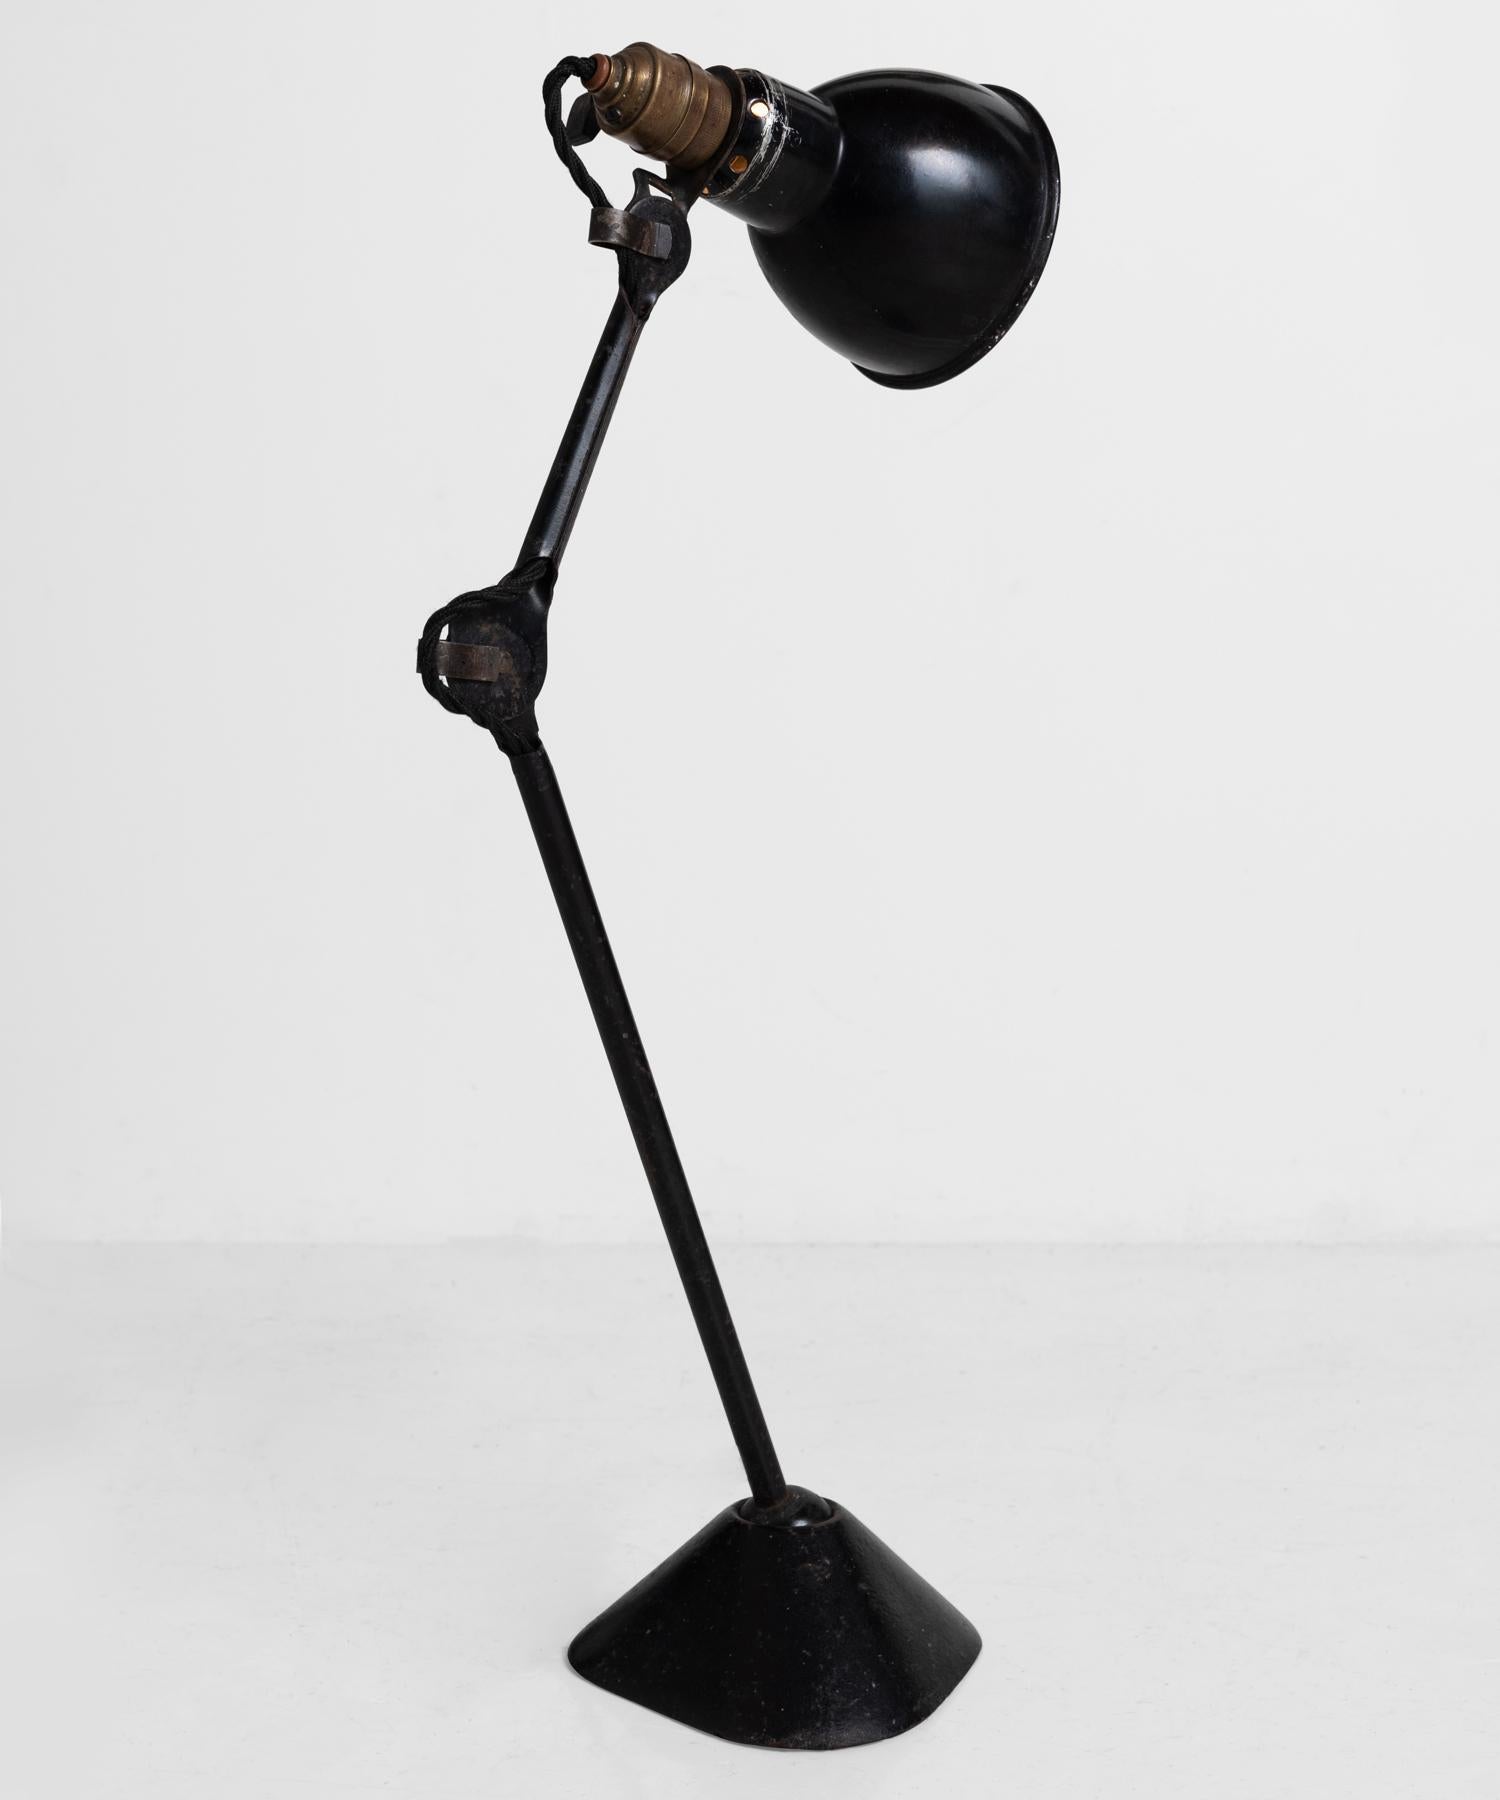 Gras Lamp No. 205, France, circa 1930.

Designed by Bernard-Albin Gras, with original black patina and iron base.